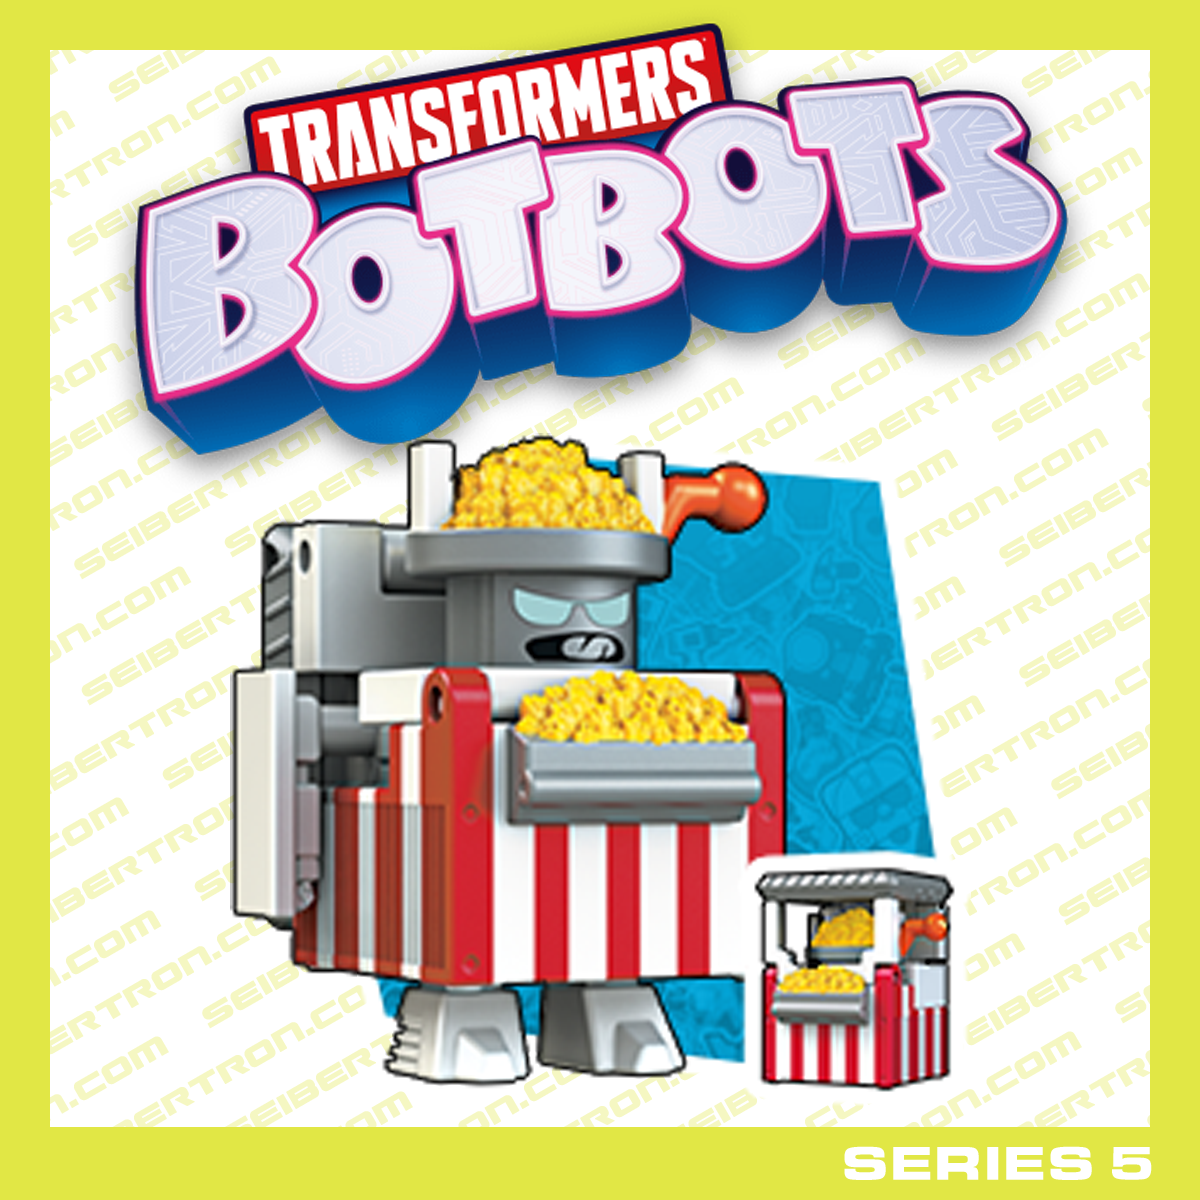 BRASH BUTTERHEAD Transformers BotBots Series 5 Movie Moguls popcorn machine 2020